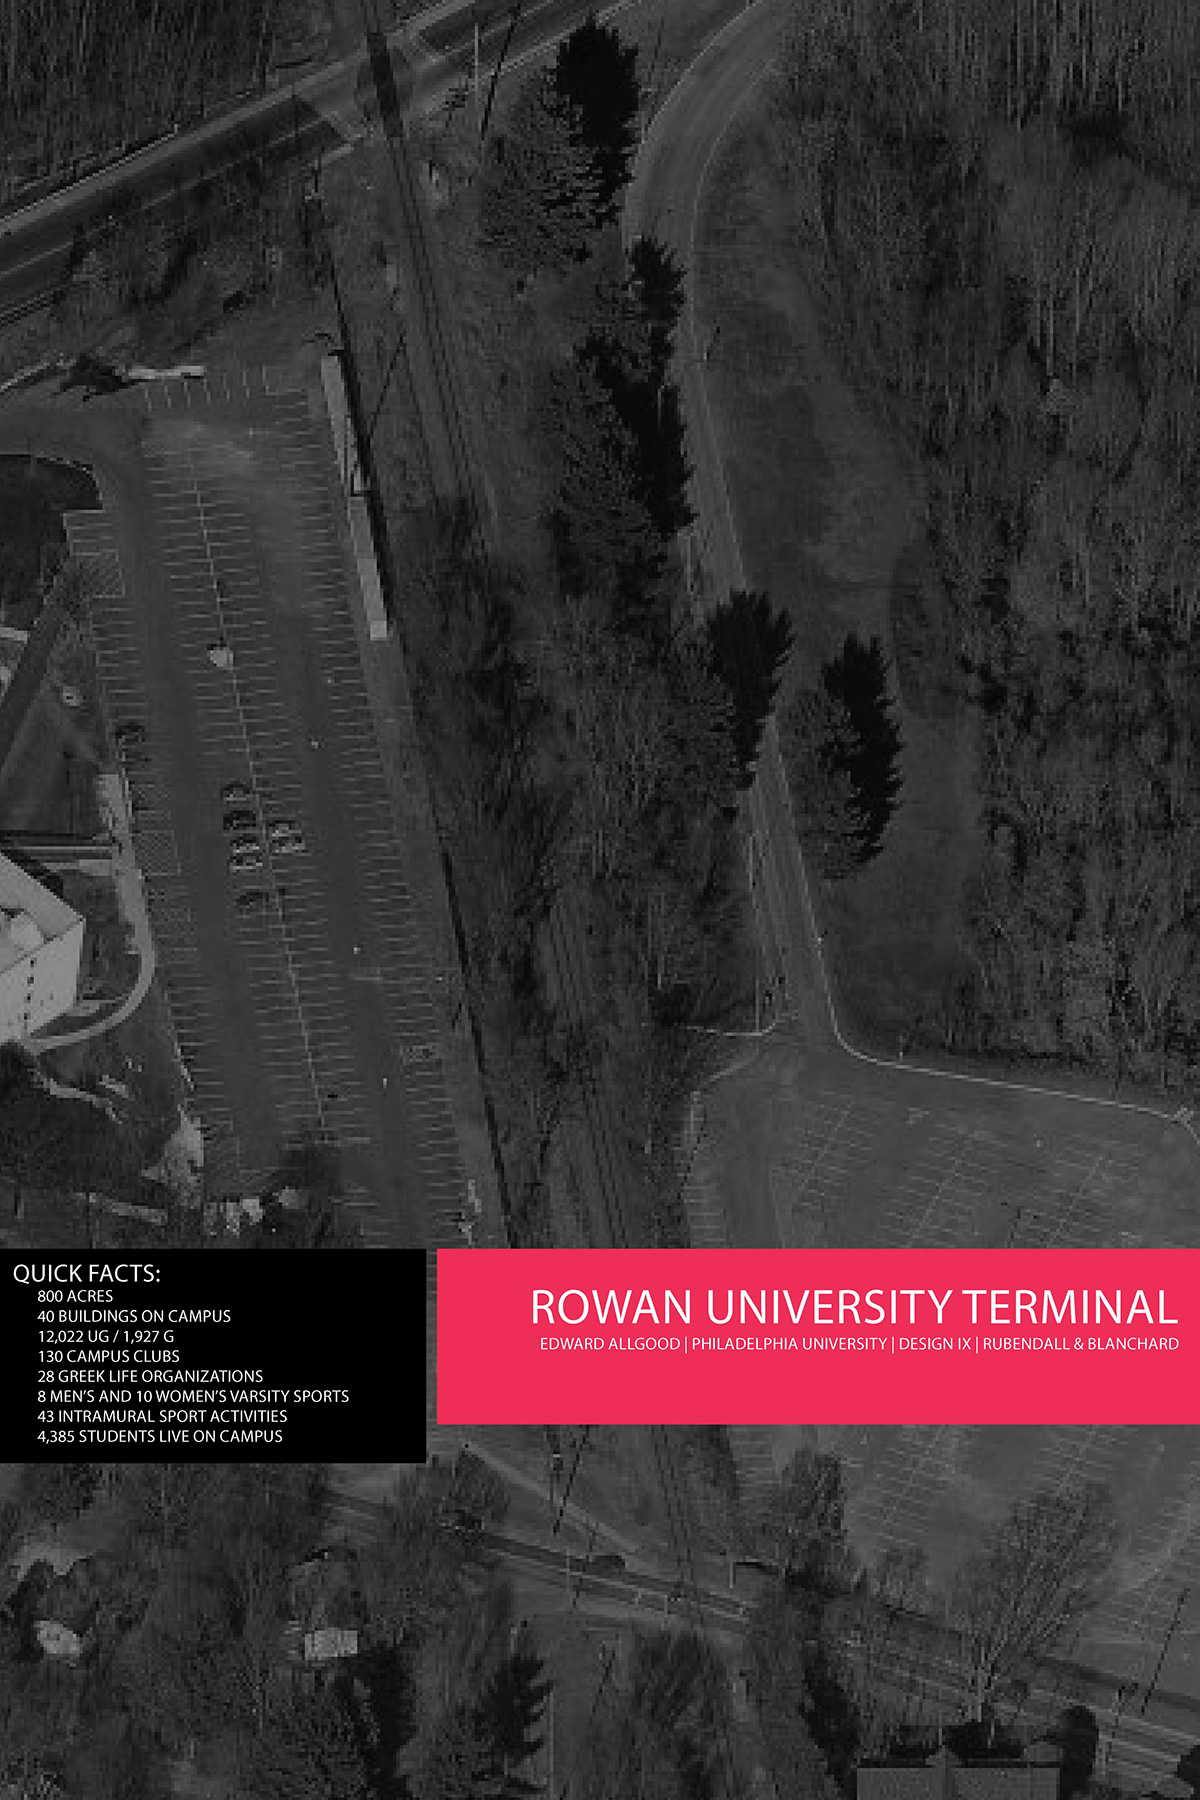 Rowan University train STATION terminal Mullica hill road Route 322 Glassboro